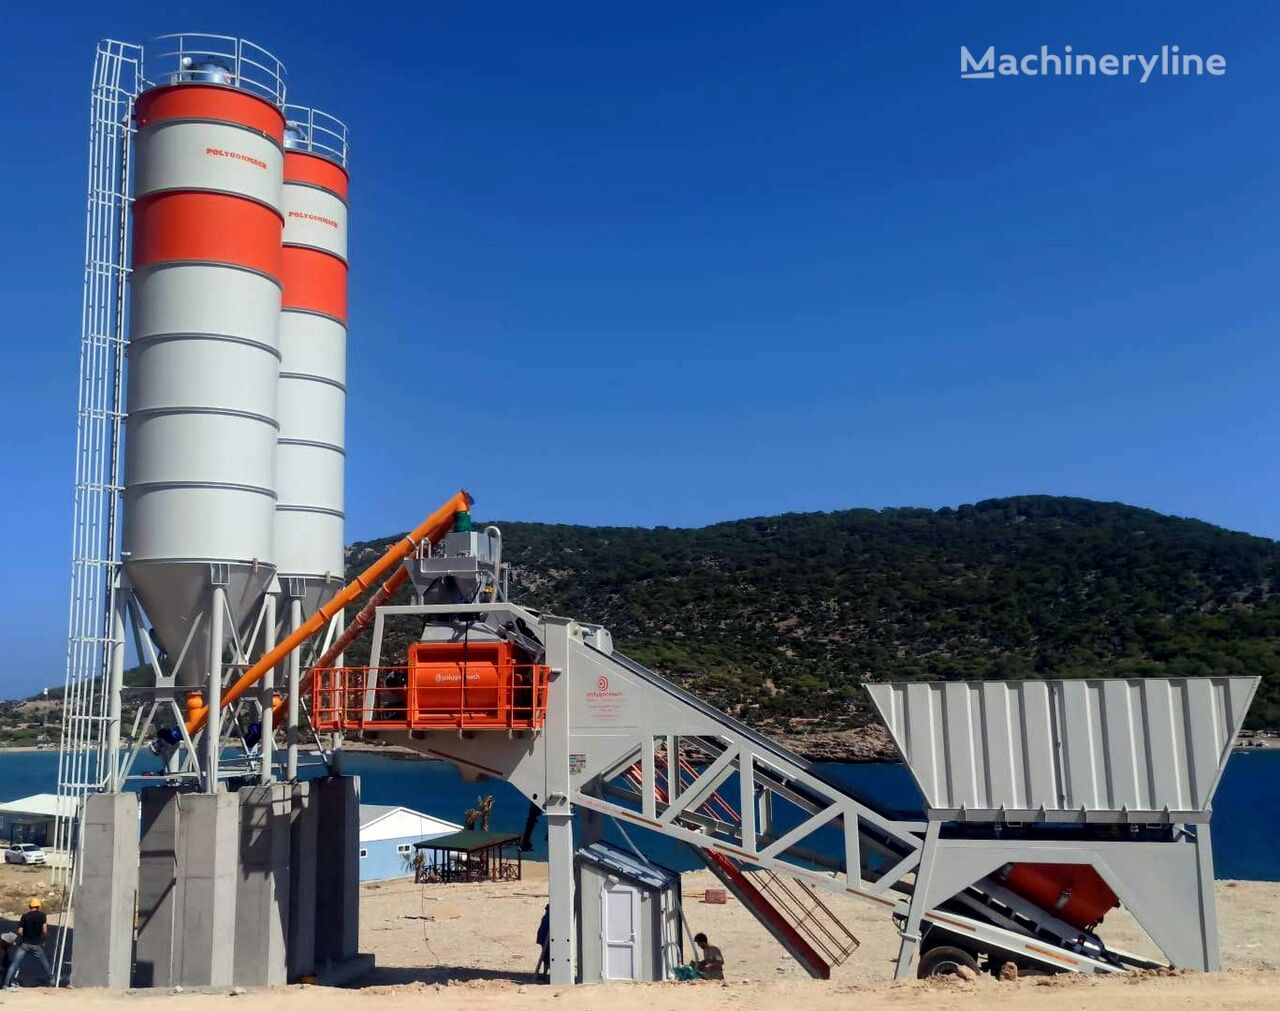 Polygonmach 100 m3 per hour mobile concrete batching plant planta de hormigón nueva